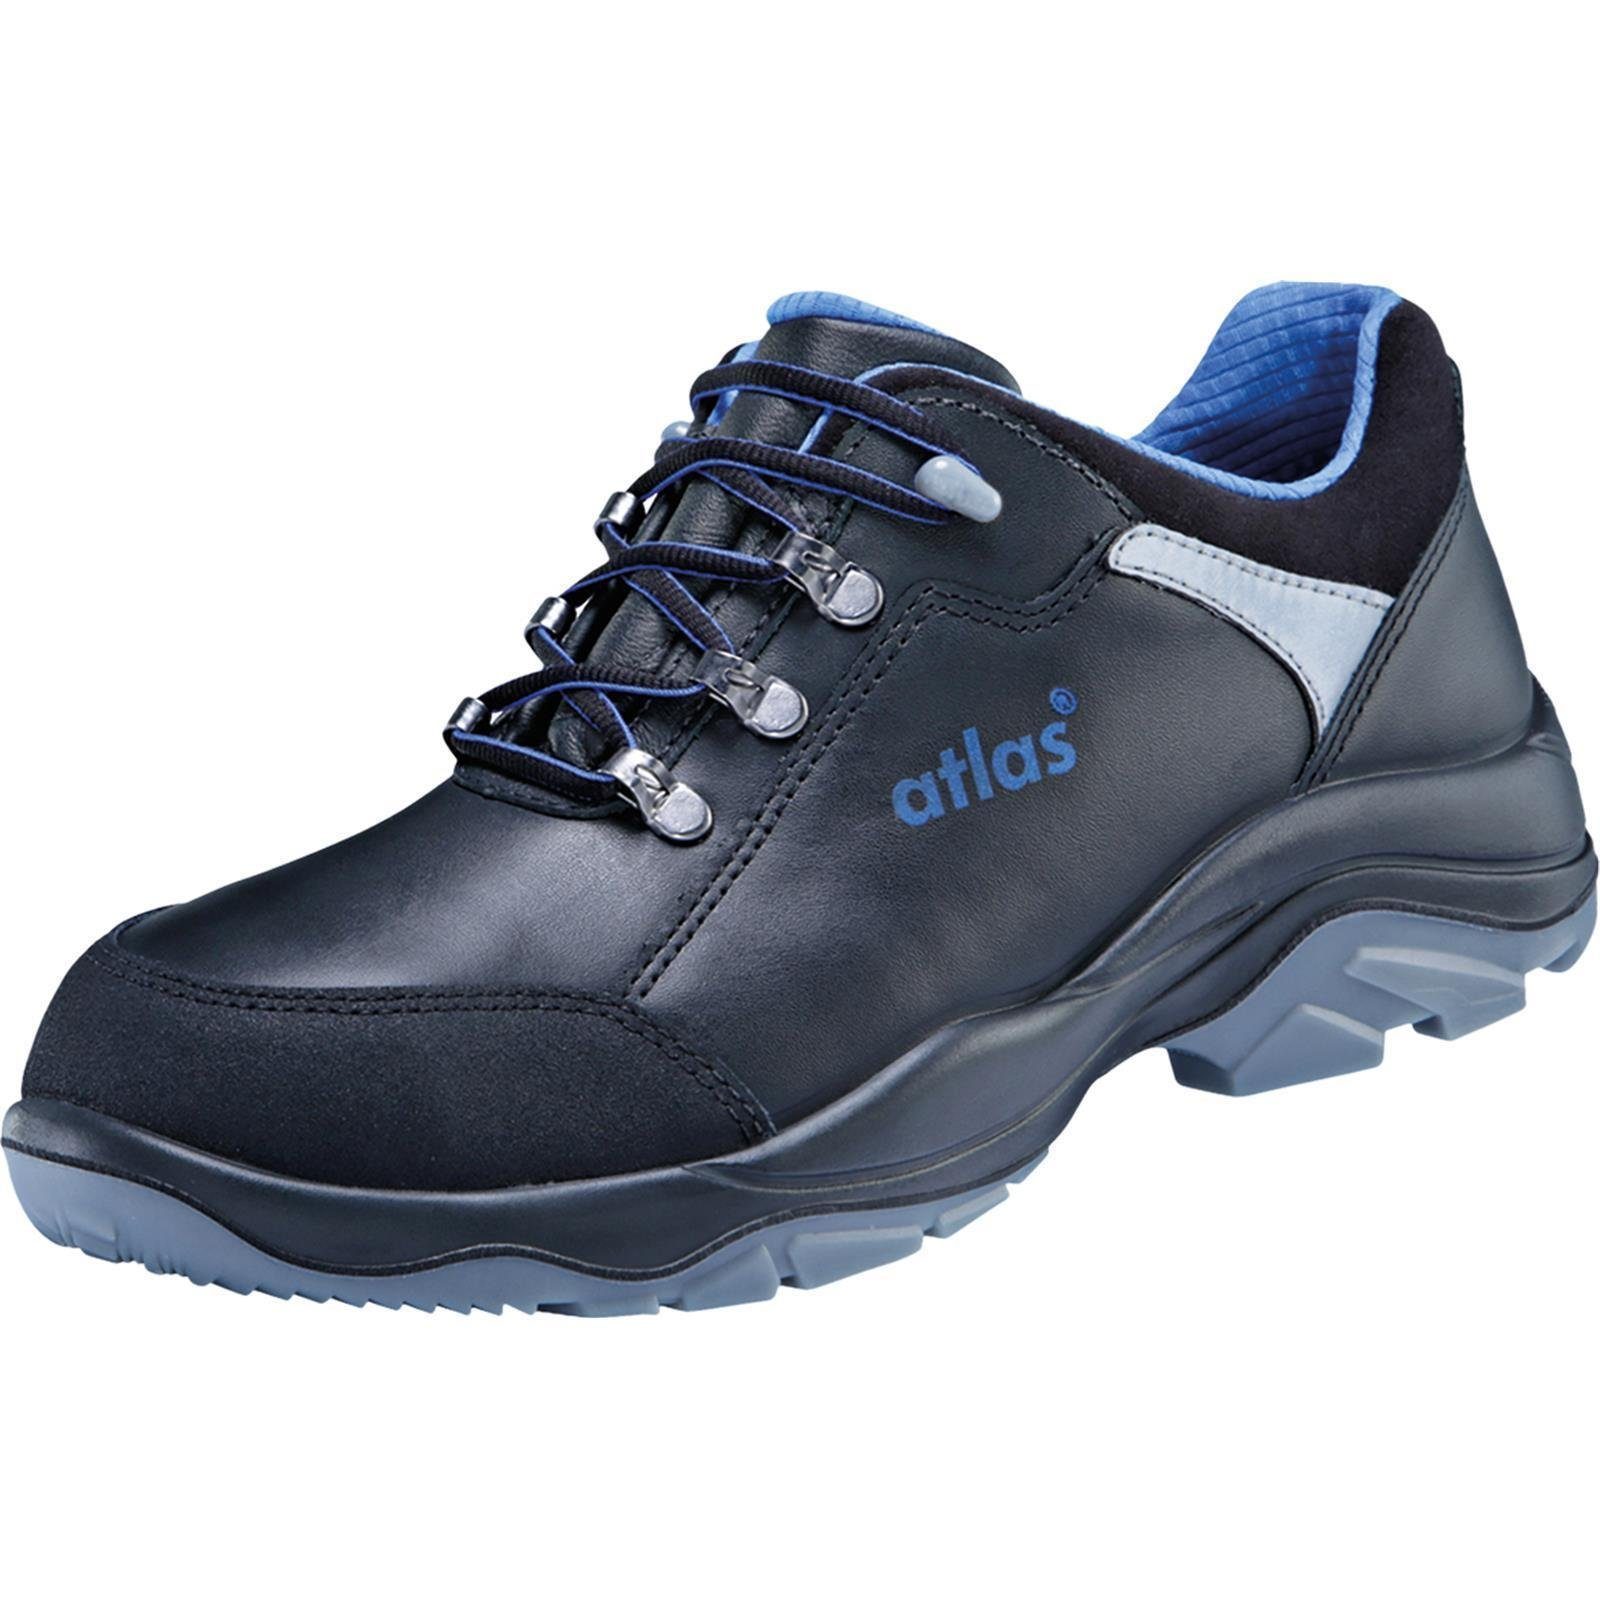 Schuhe Sicherheitsschuhe ATLAS Atlas XP 435 ESD EN ISO 20345 S3 Sicherheitsschuhe Arbeitsschuh